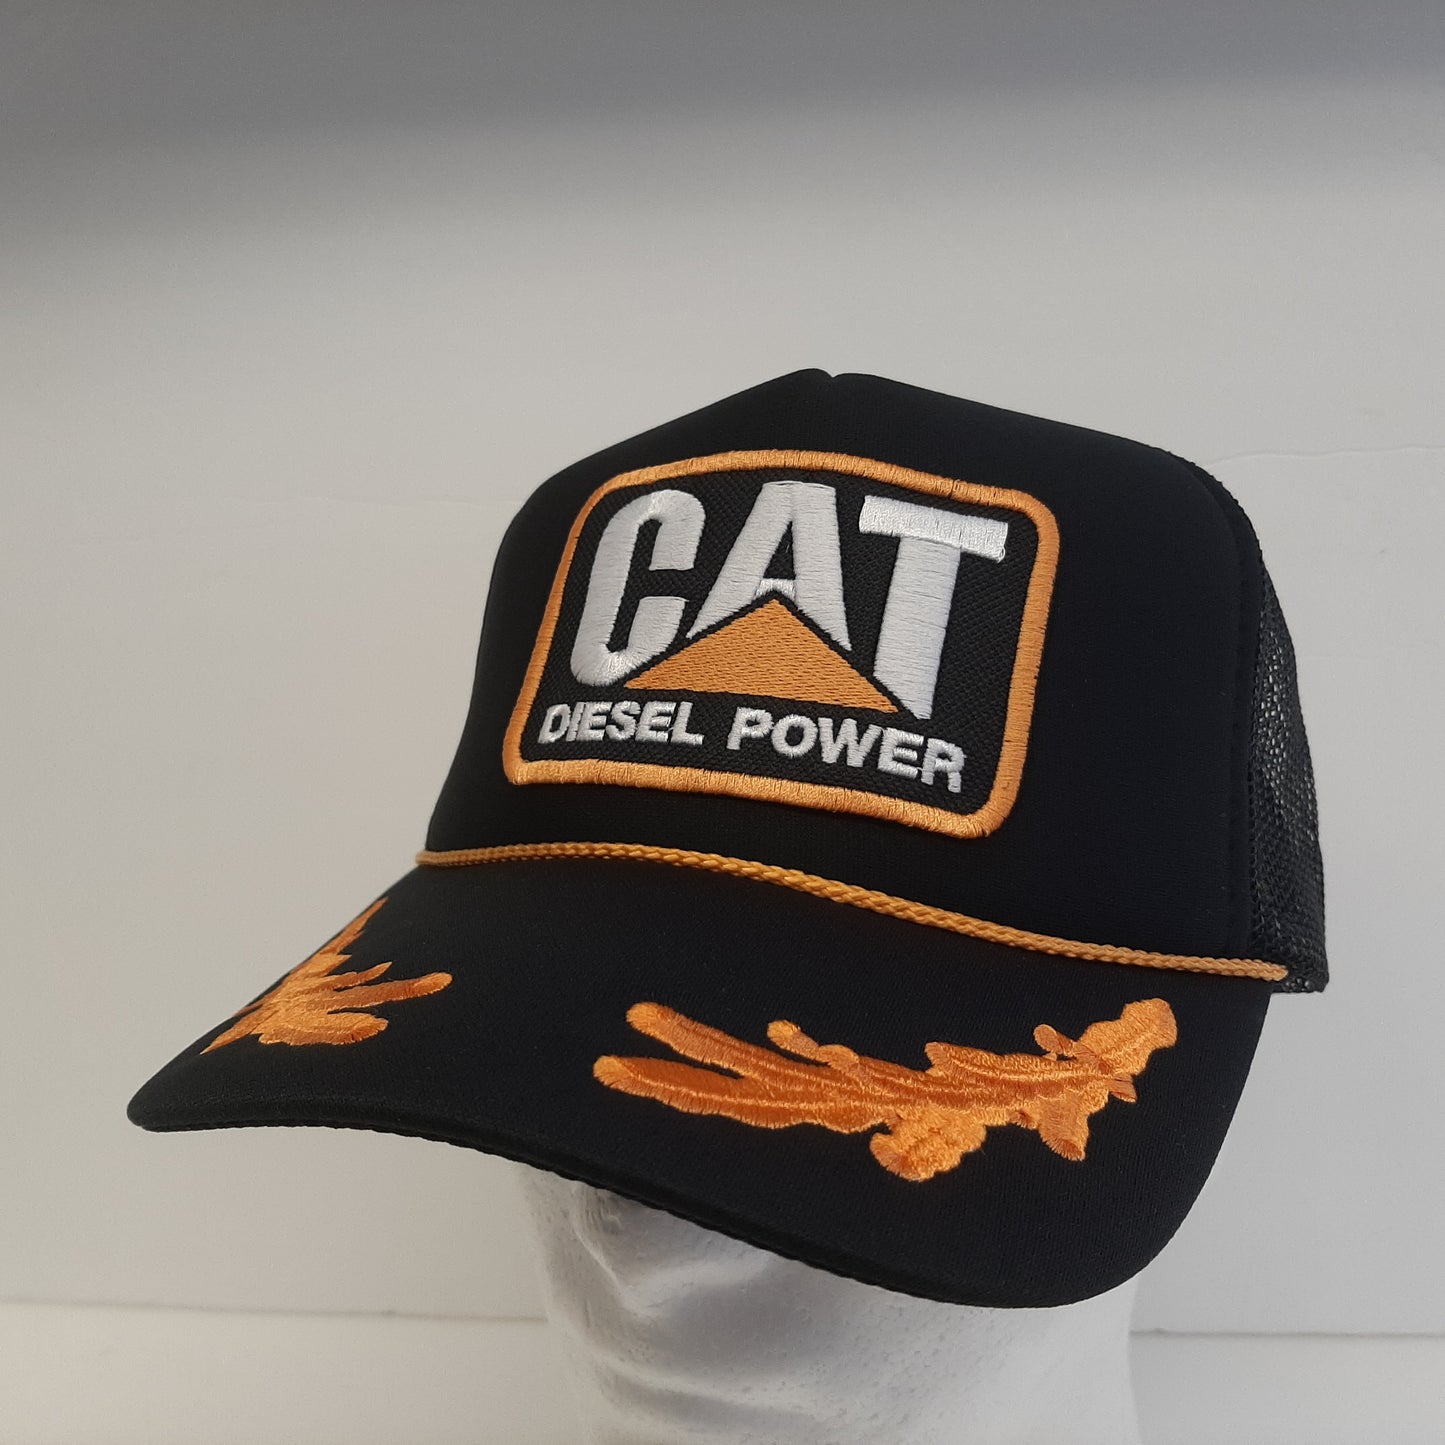 CAT Caterpillar Diesel Power Vintage Trucker Foam Mesh Snapback Cap Embroidered Patch Hat